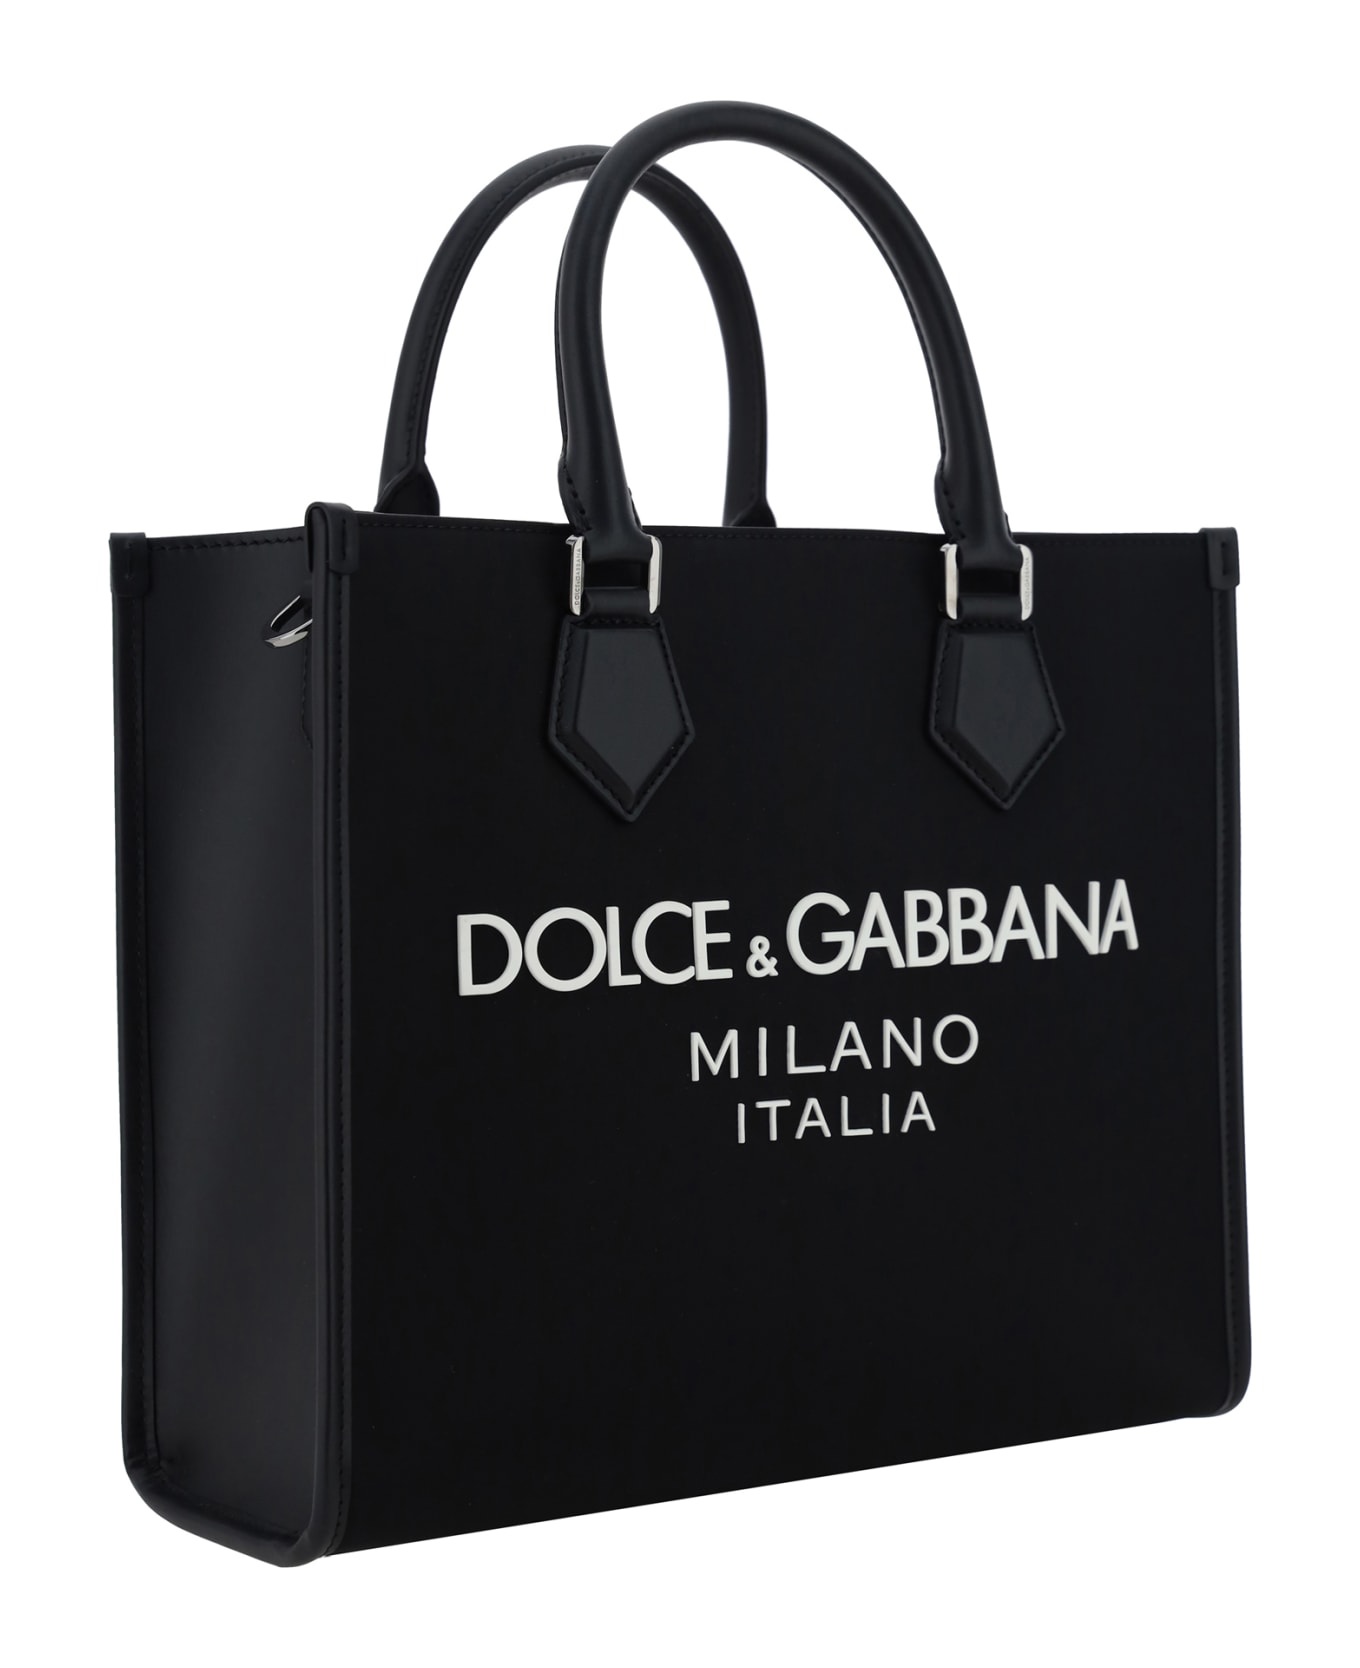 Dolce & Gabbana Nylon Small Tote Bag - Nero/nero トートバッグ